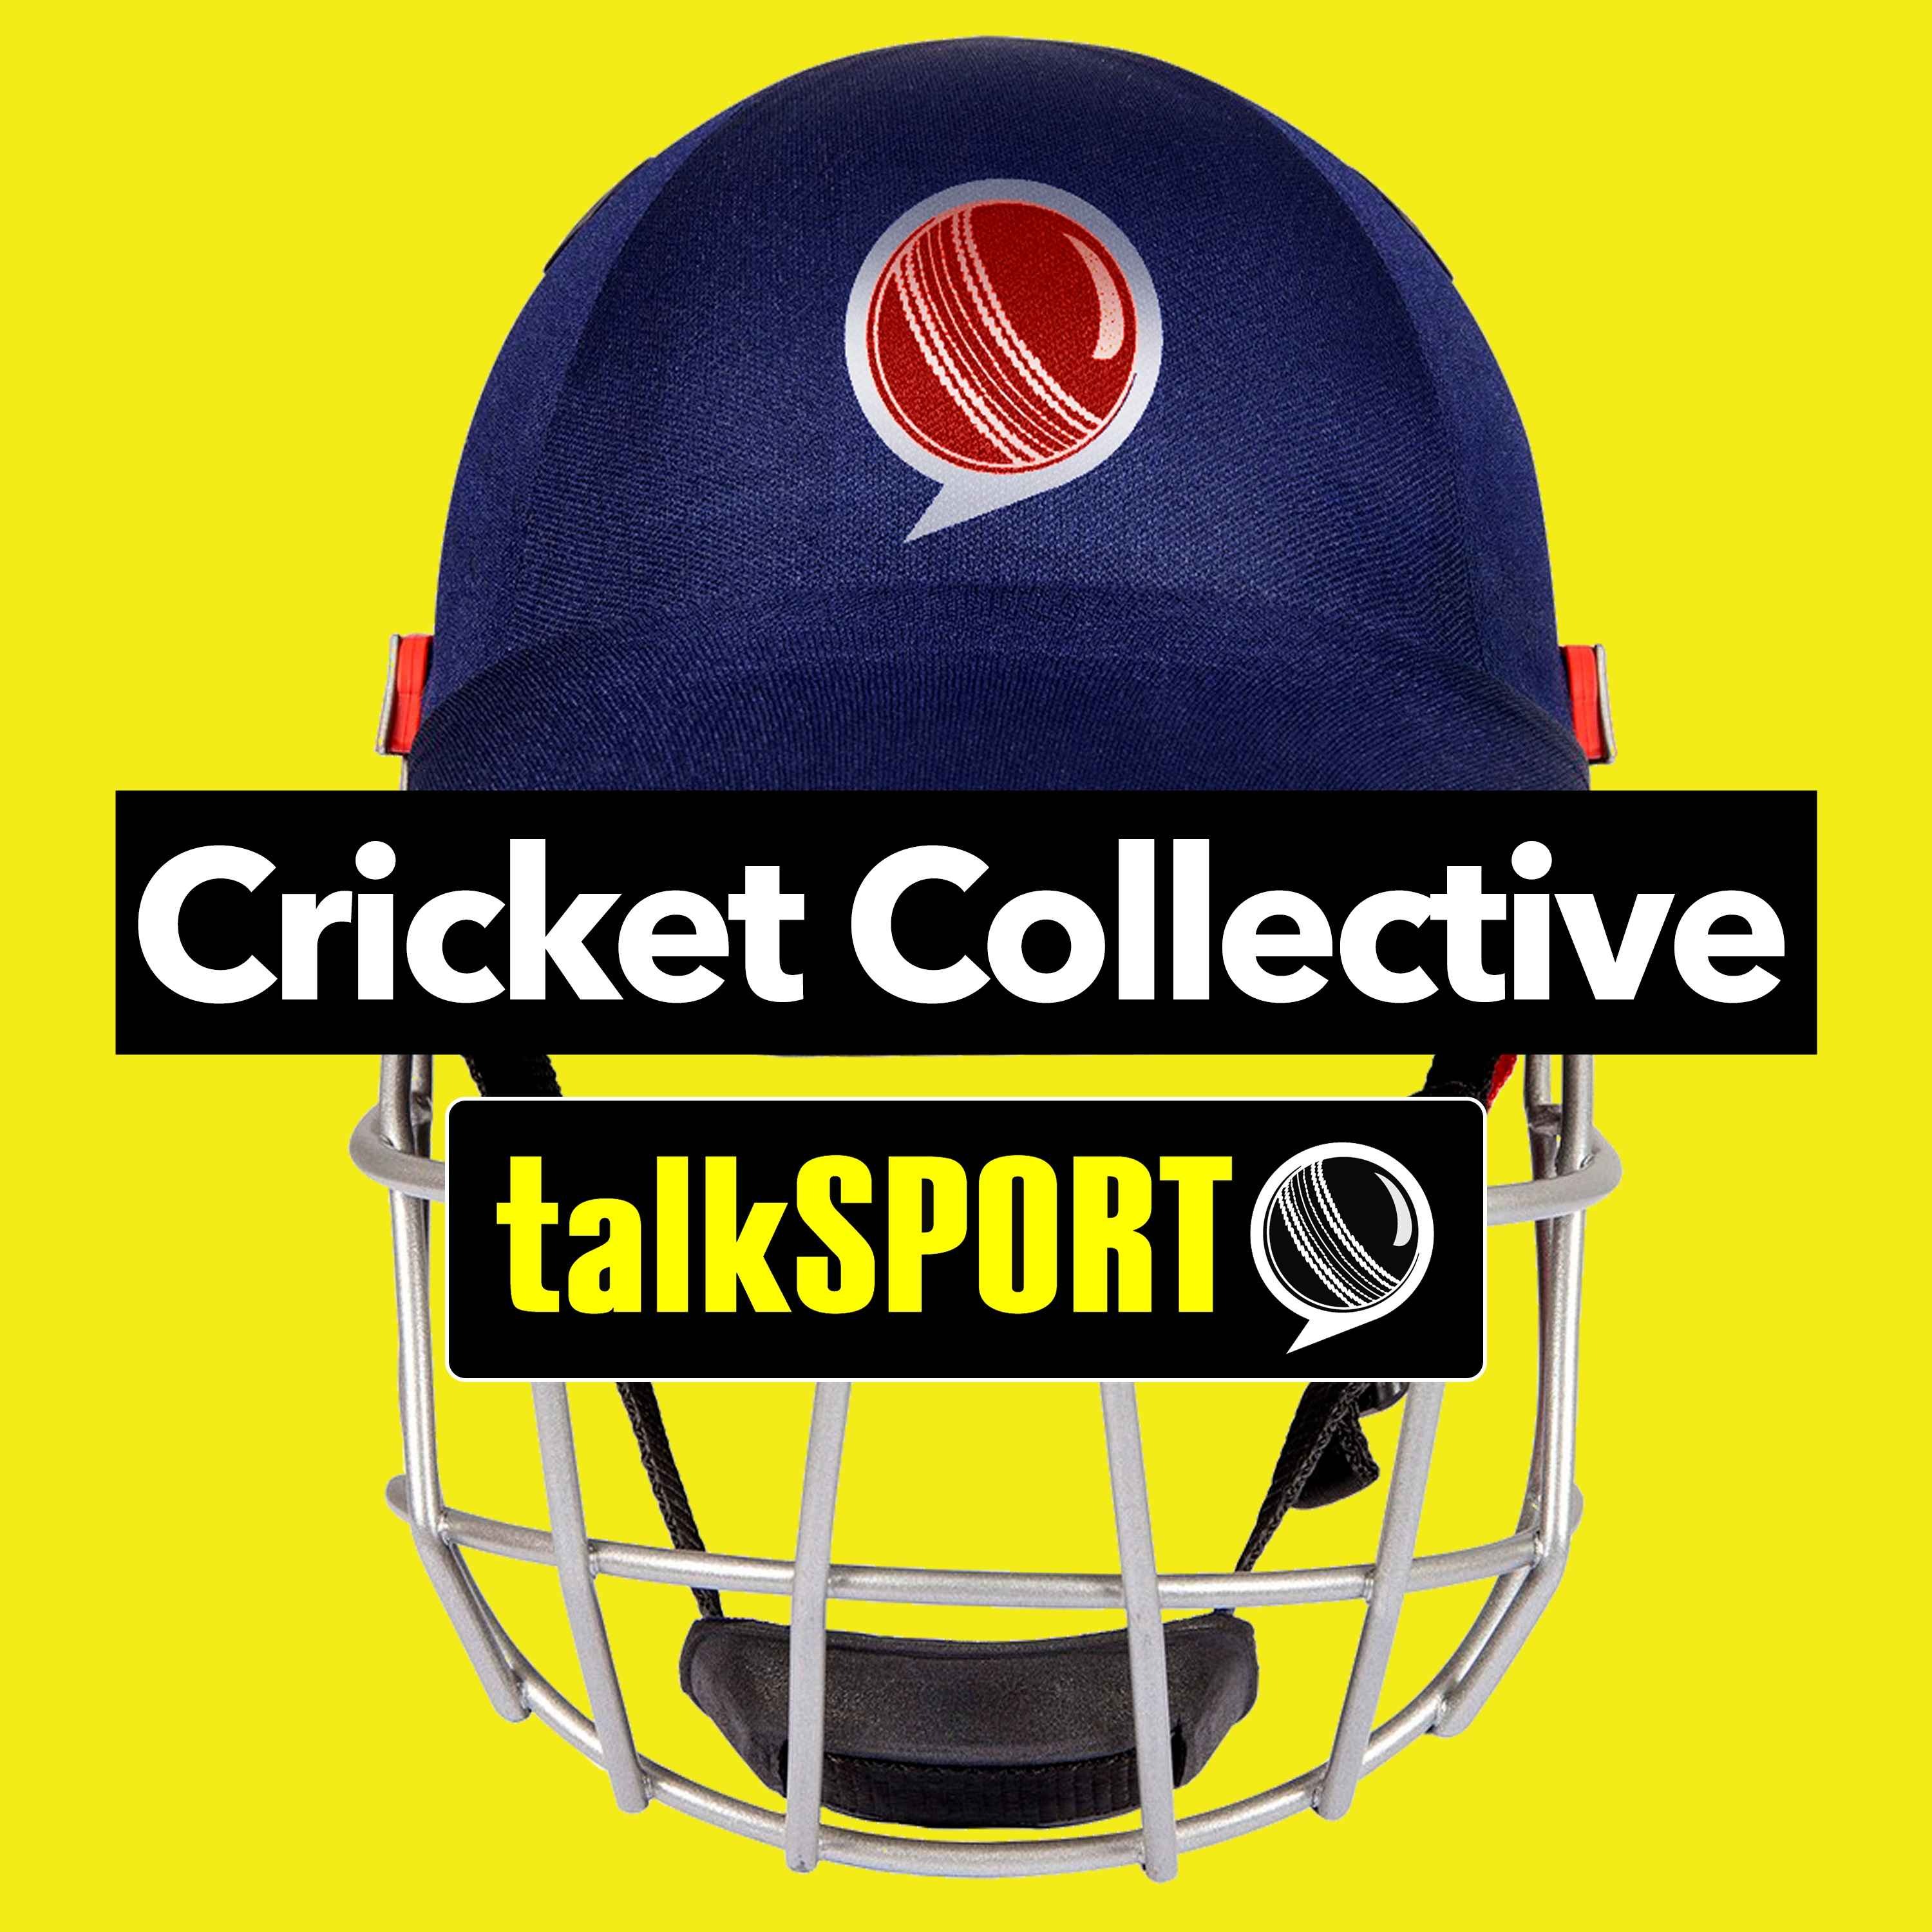 The Cricket Collective - Men's & Women's Ashes Both Alive; Netherlands Fixture Plea & Major League Cricket Begins!